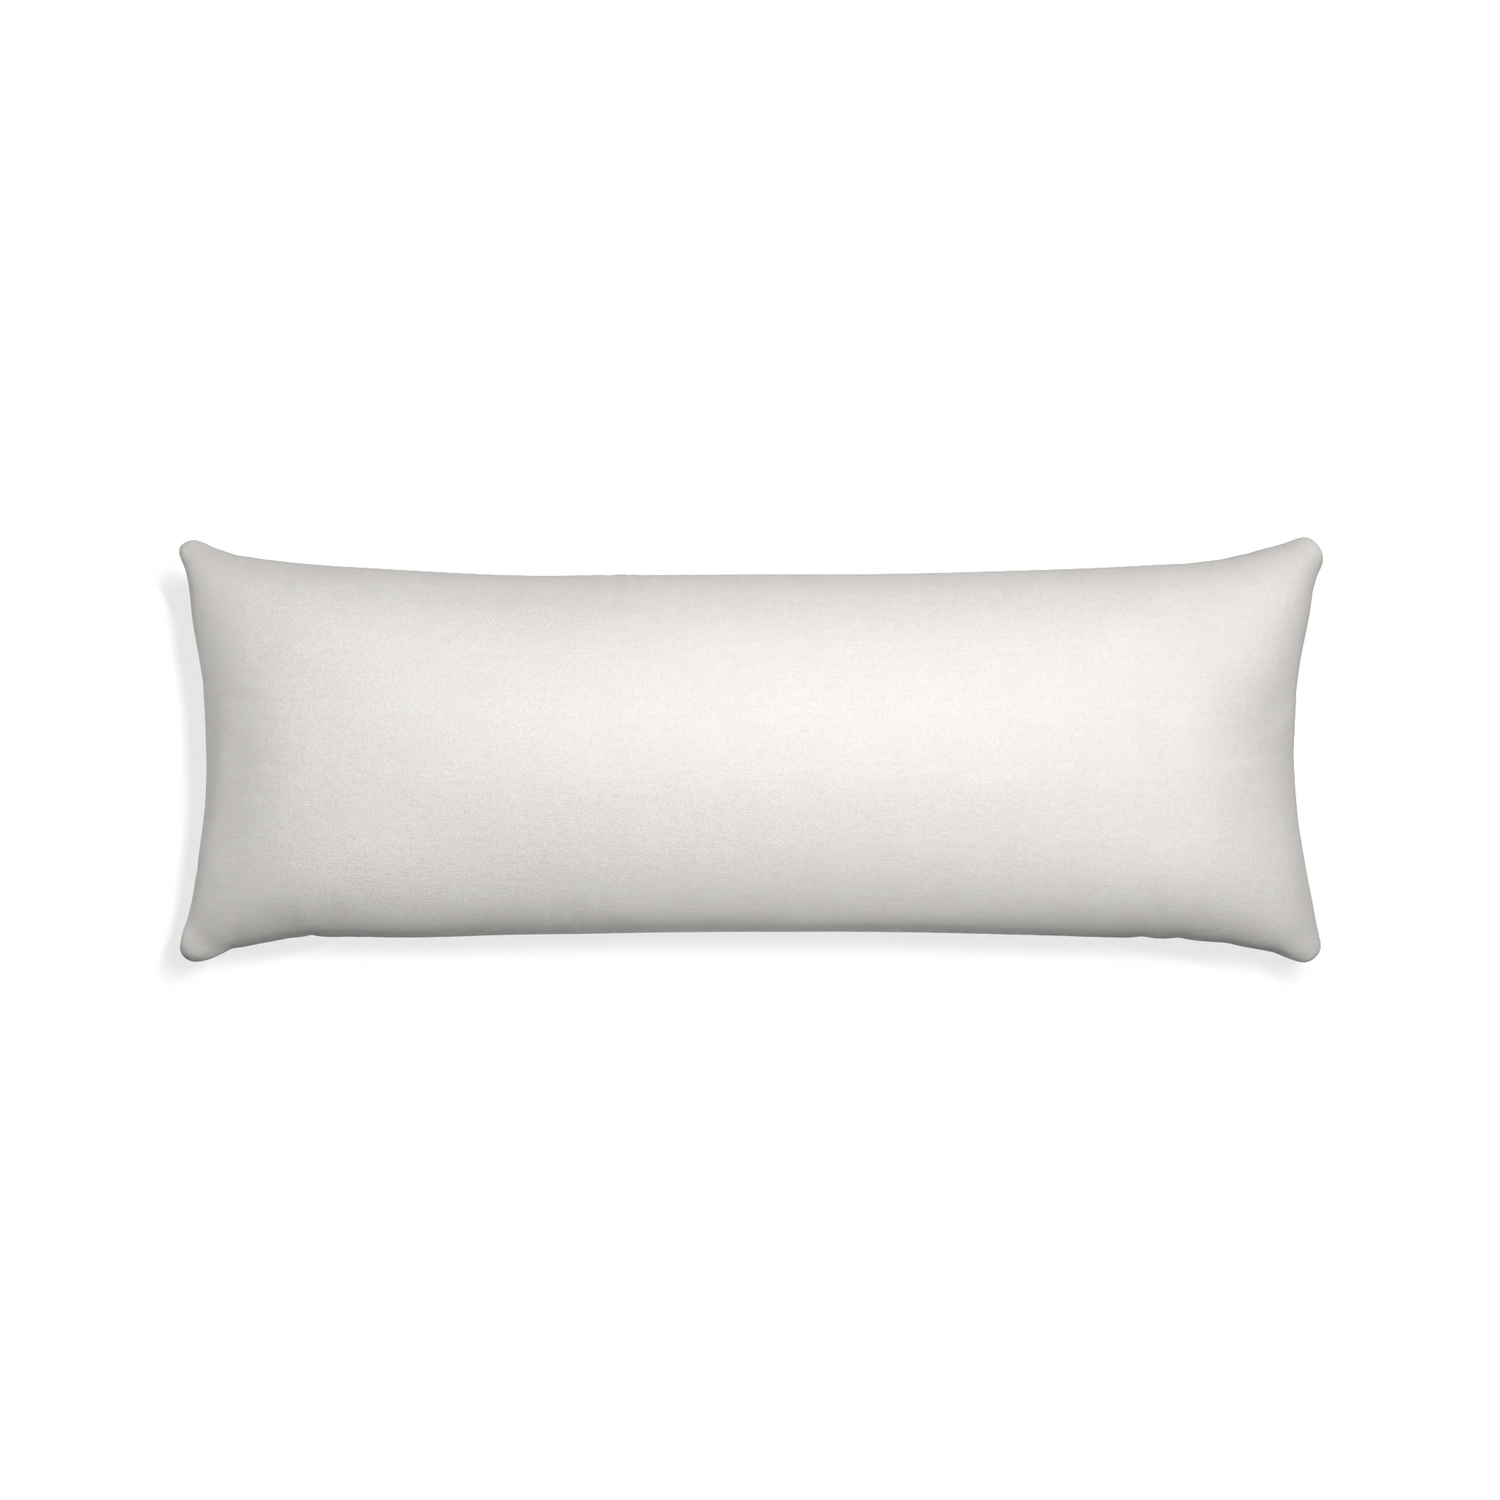 Xl-lumbar flour custom pillow with none on white background